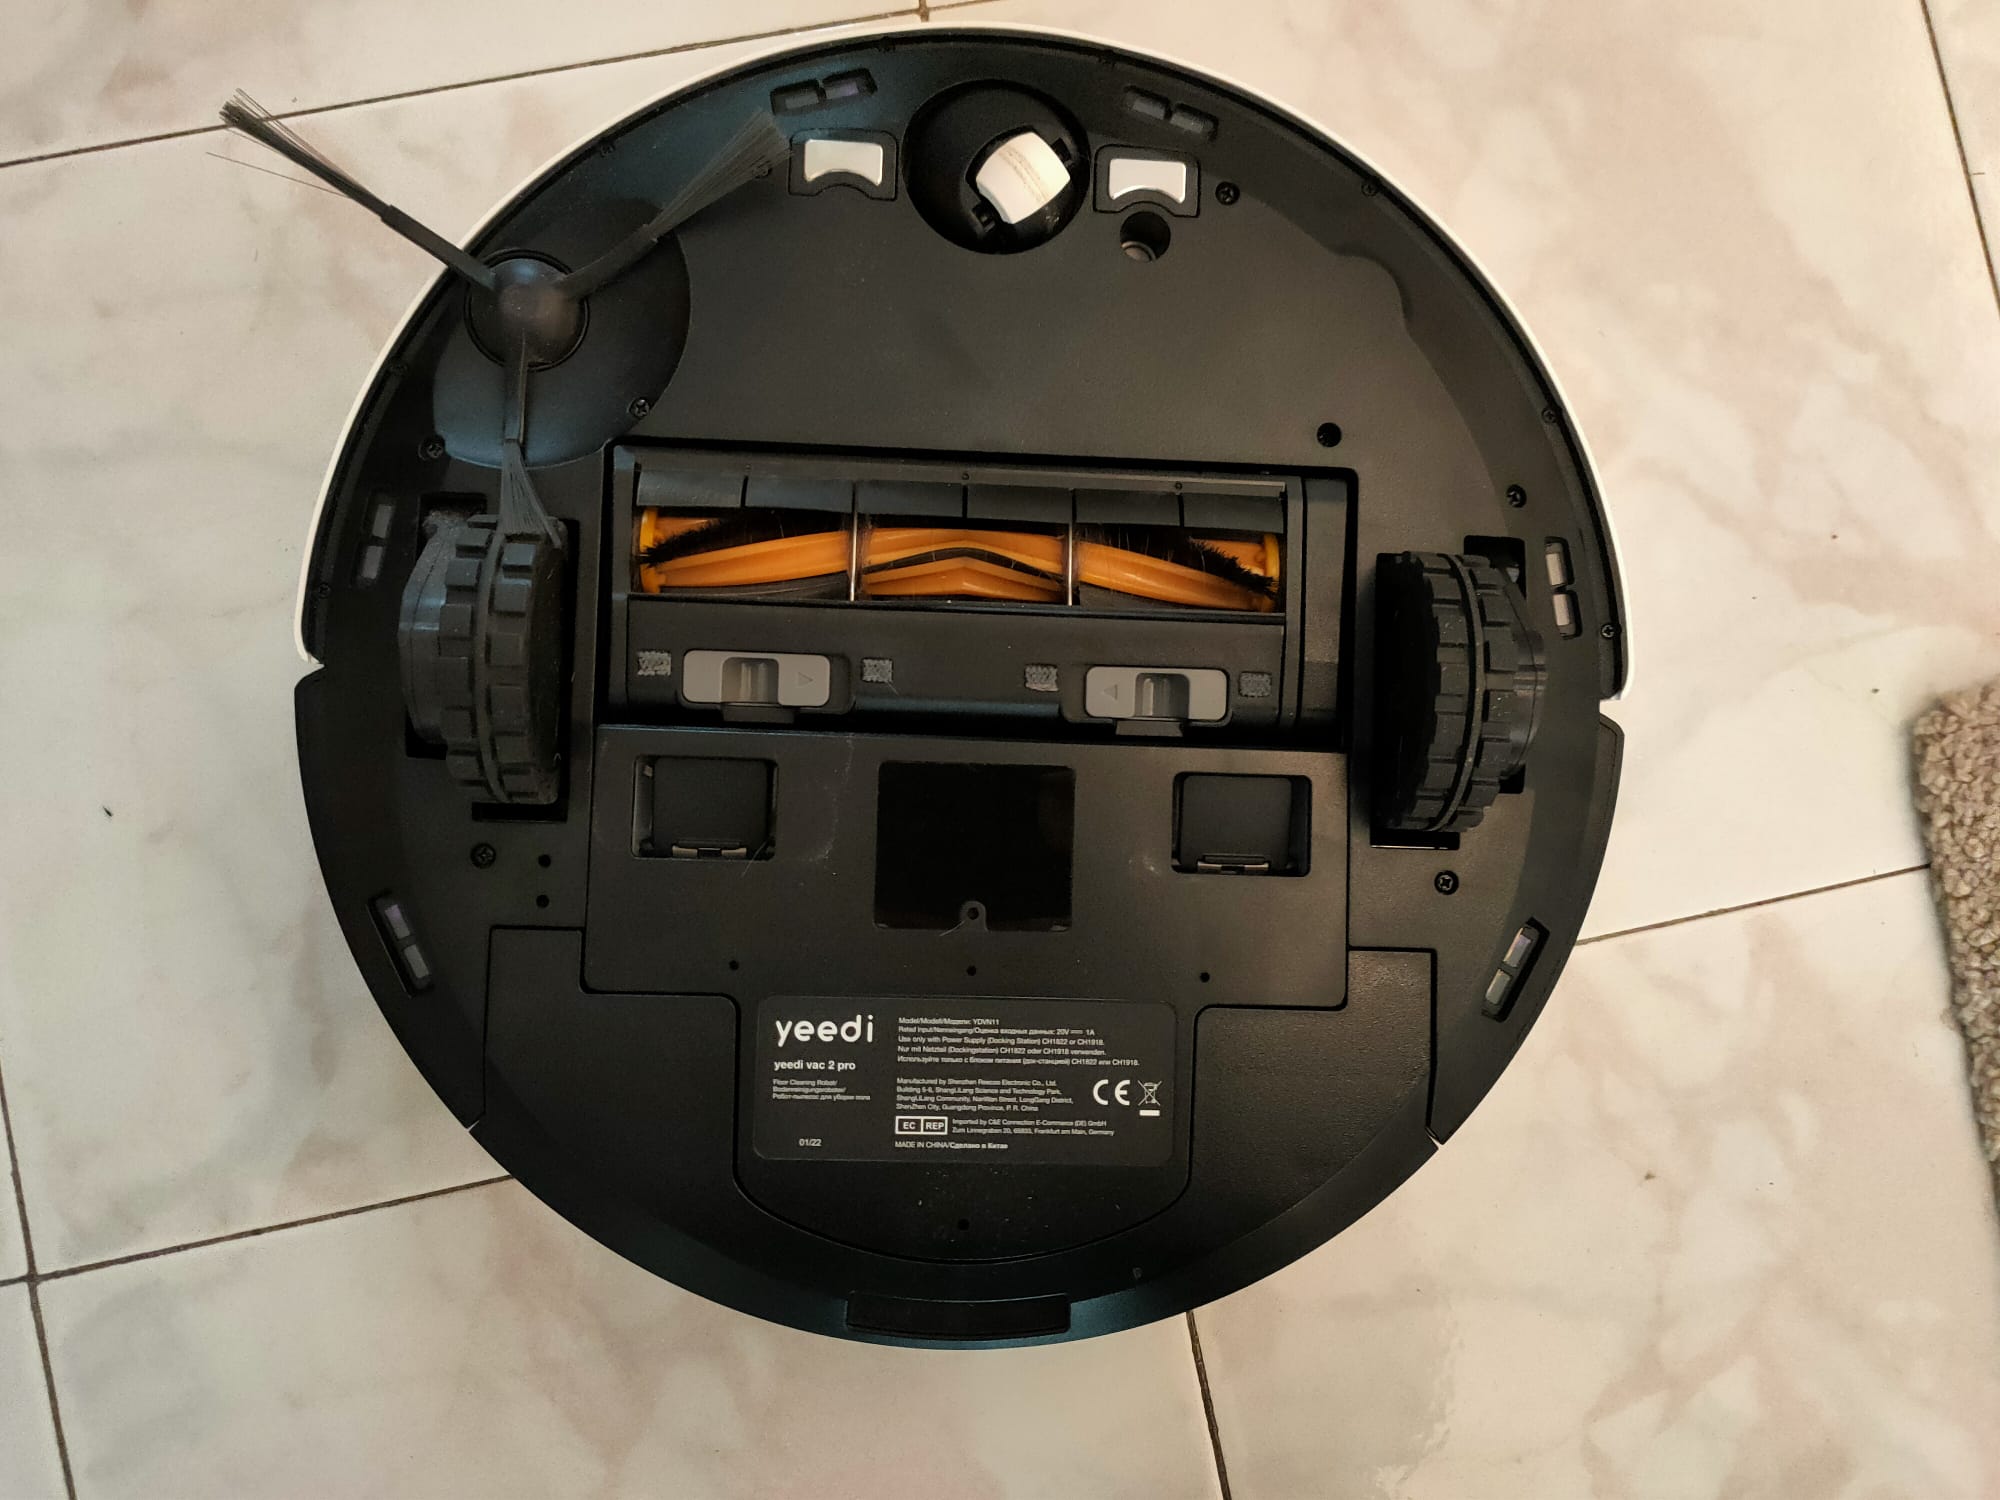 Yeedi vac 2 Pro review: the best robot vacuum cleaner?